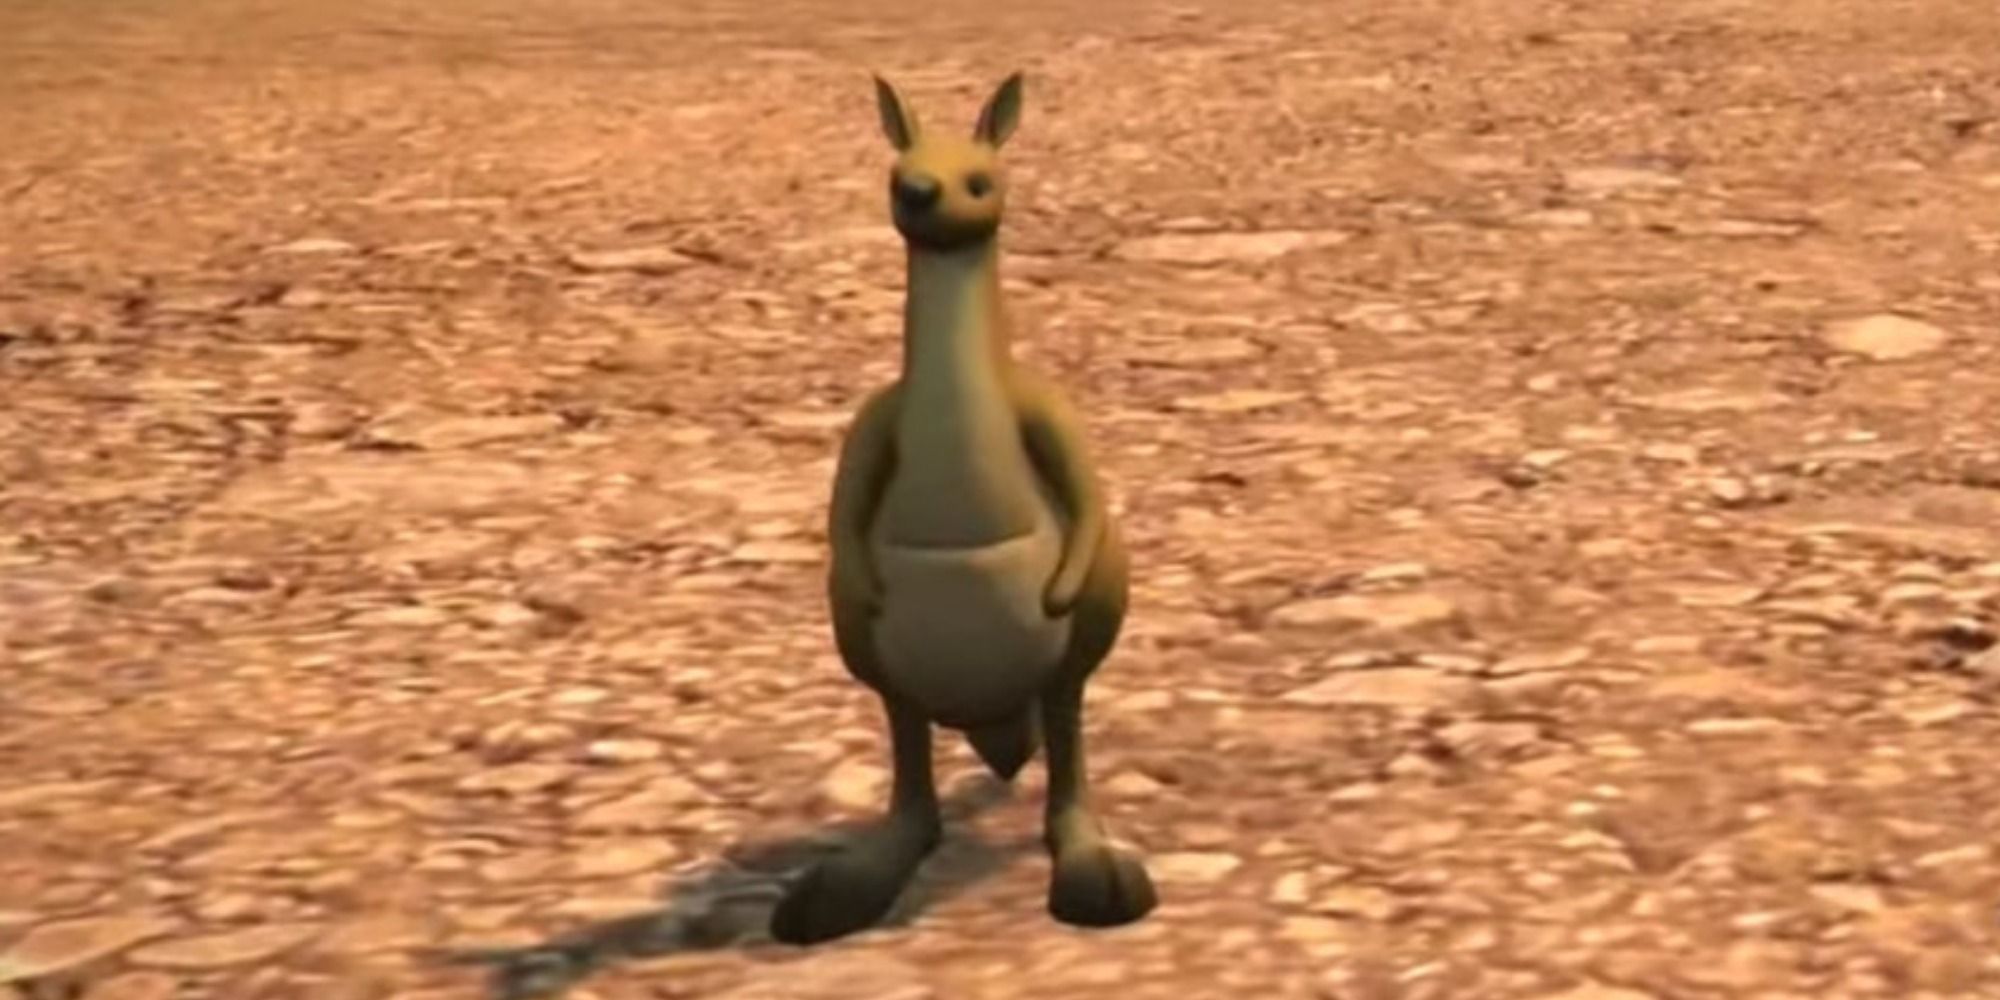 The Wind-up Kangaroo Minion in Final Fantasy 14